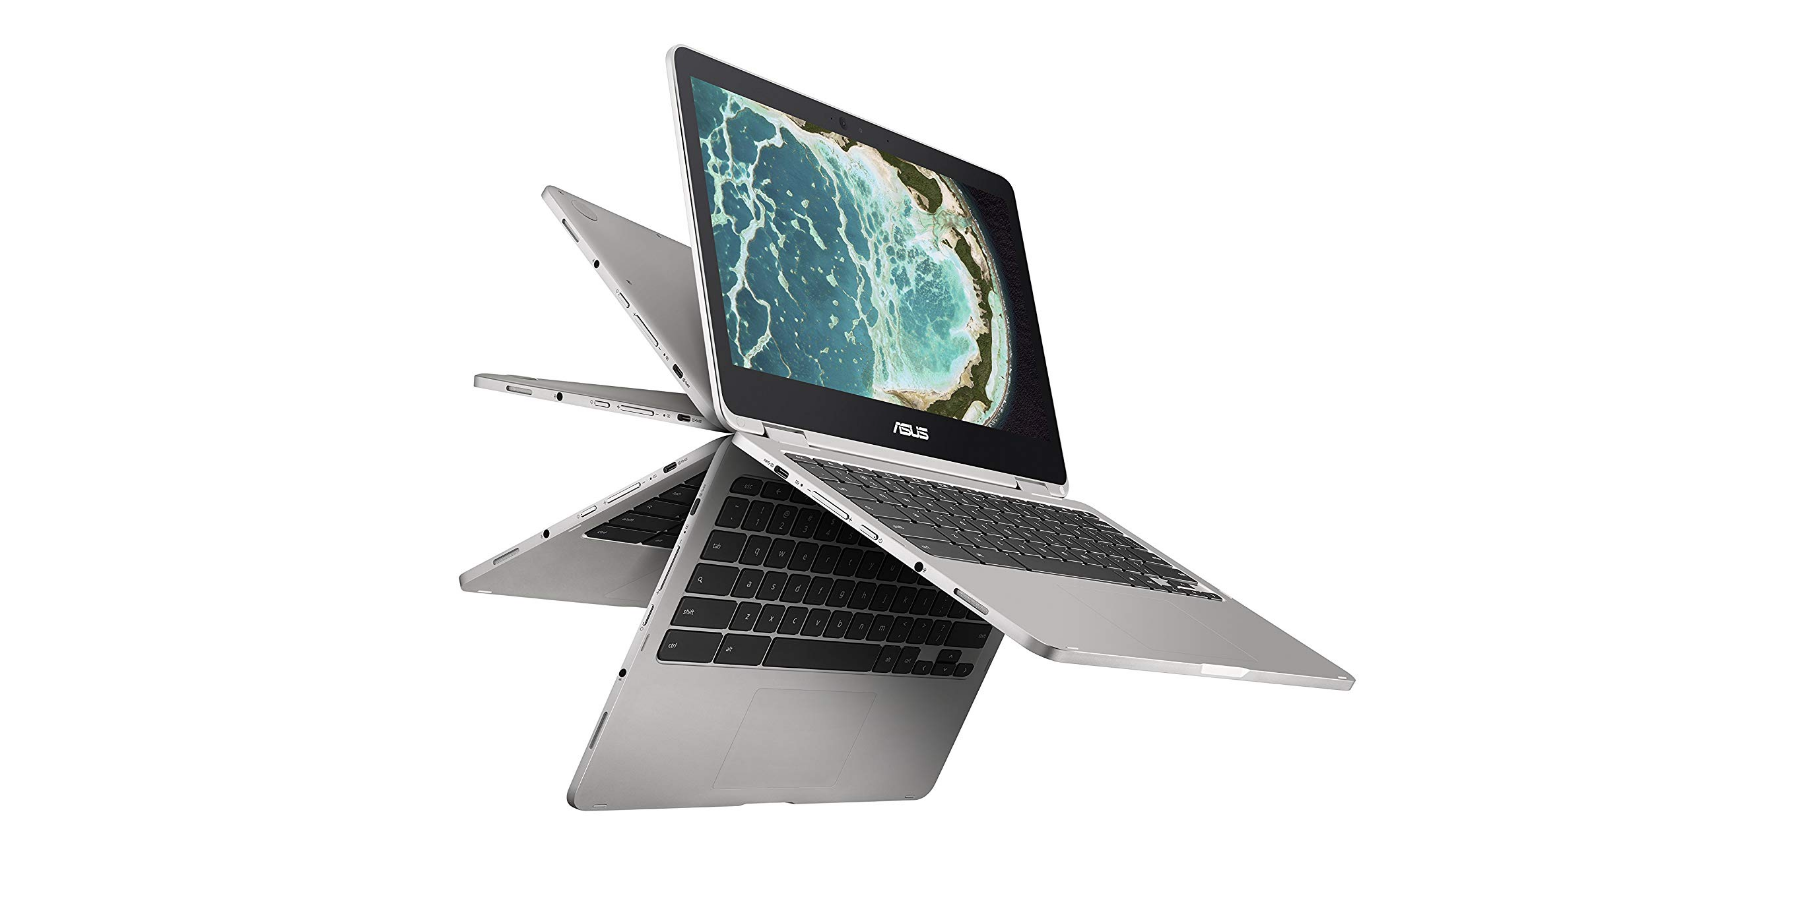 verlamming verhoging nikkel Best Laptops 2018 | What Laptop Should I Buy?